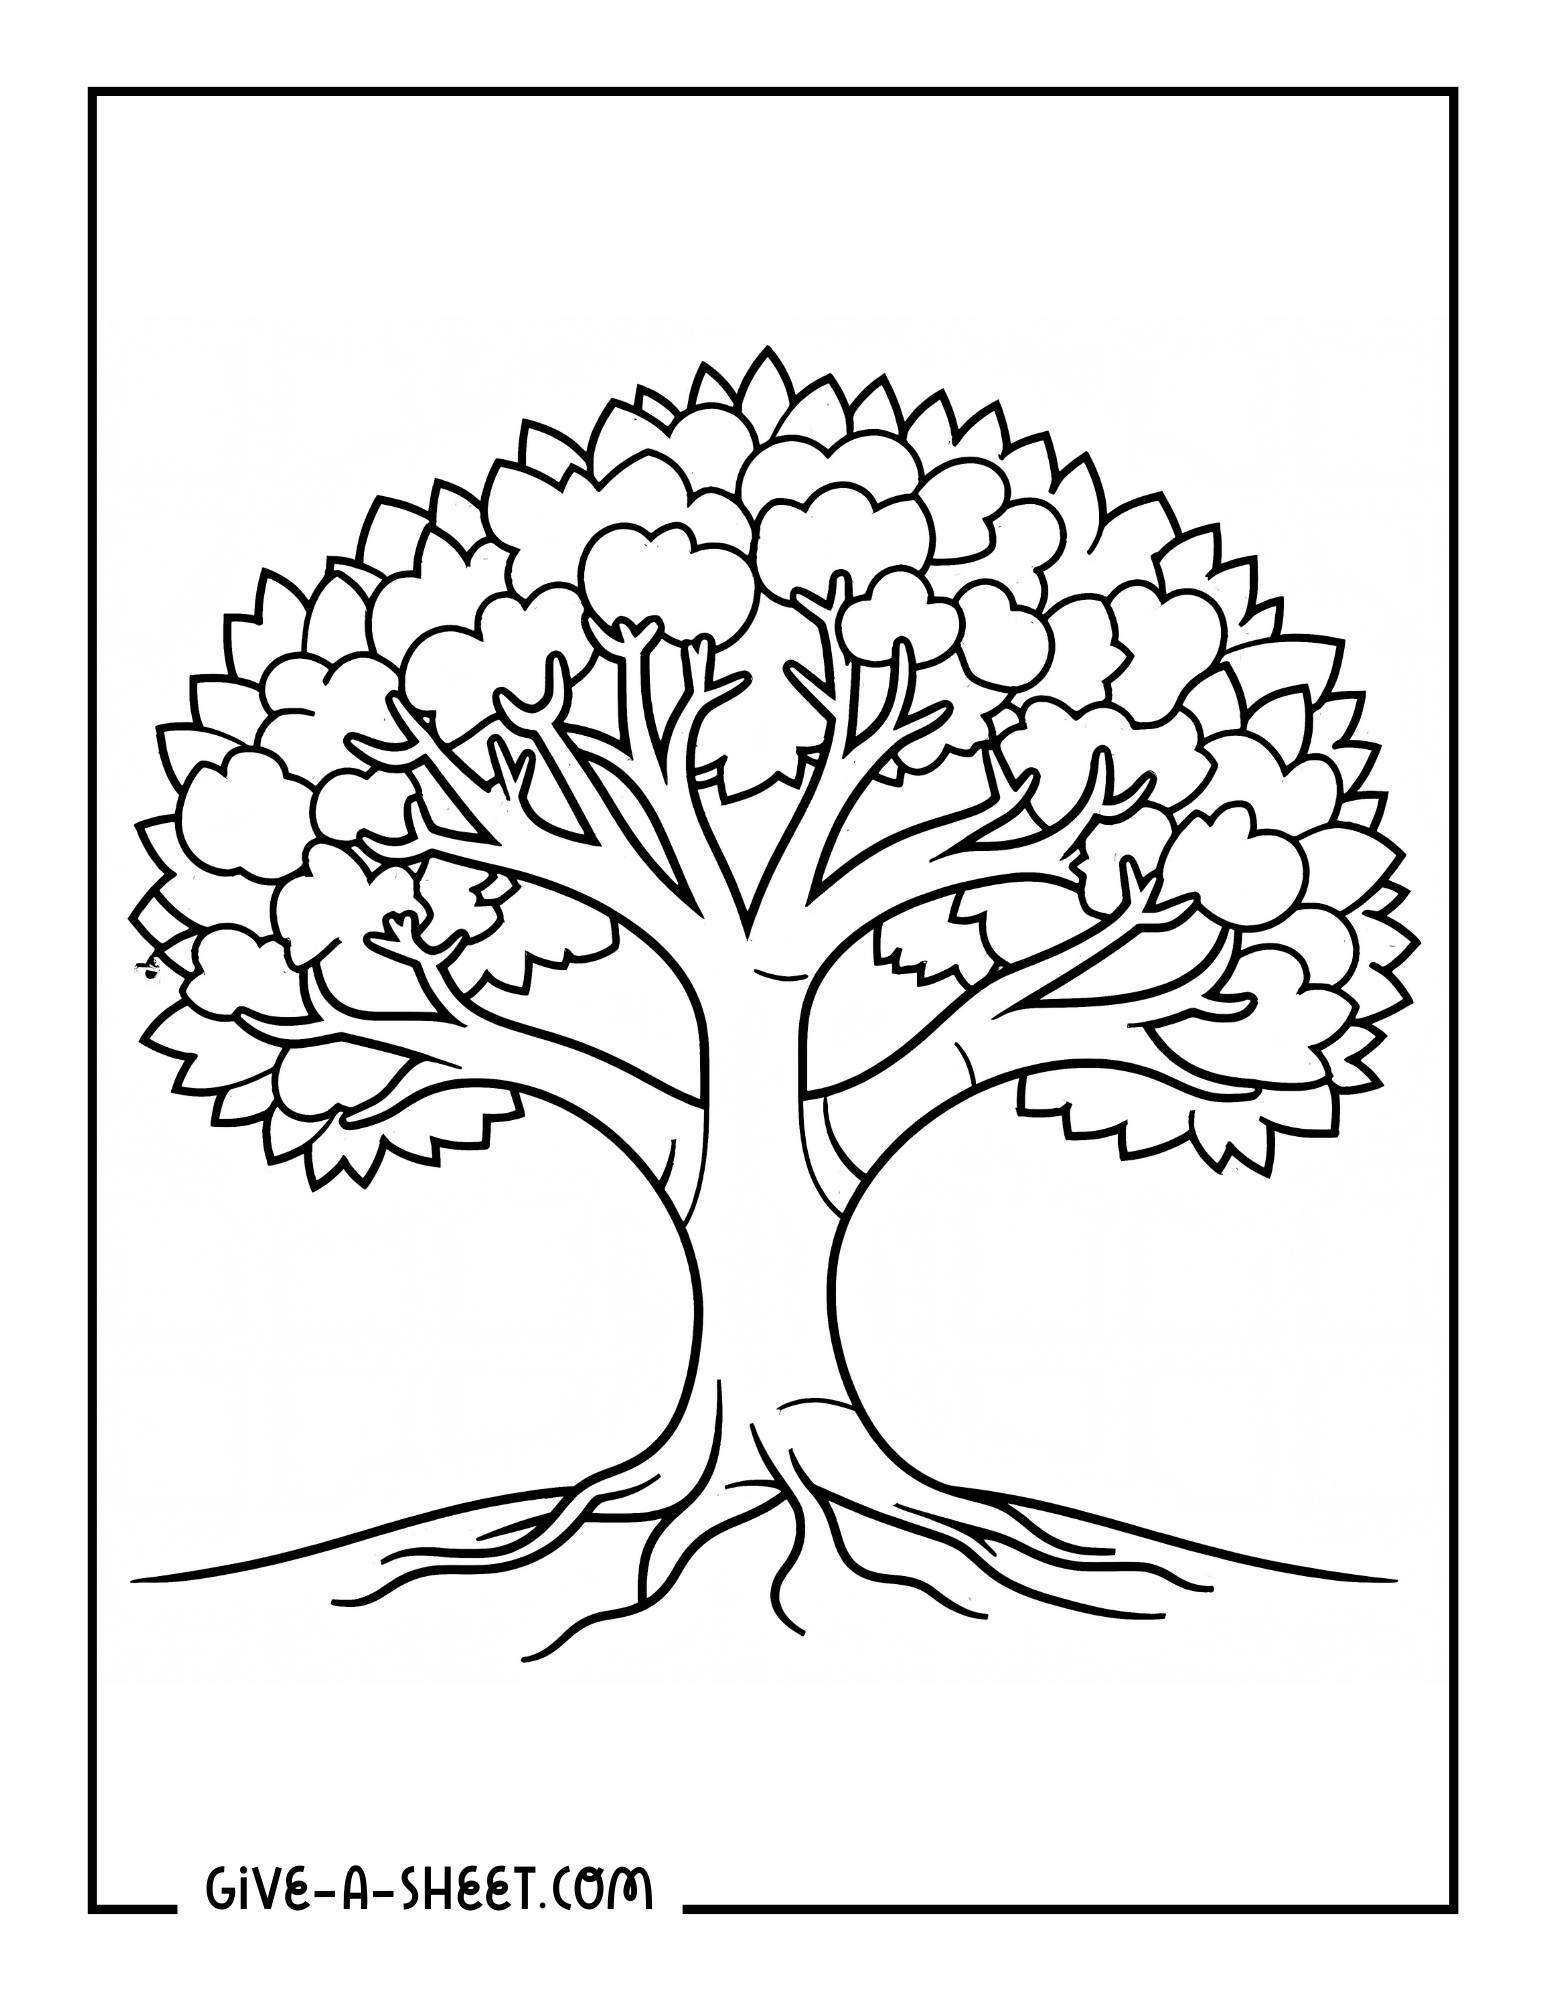 Easy cartoon tree illustration coloring sheet.